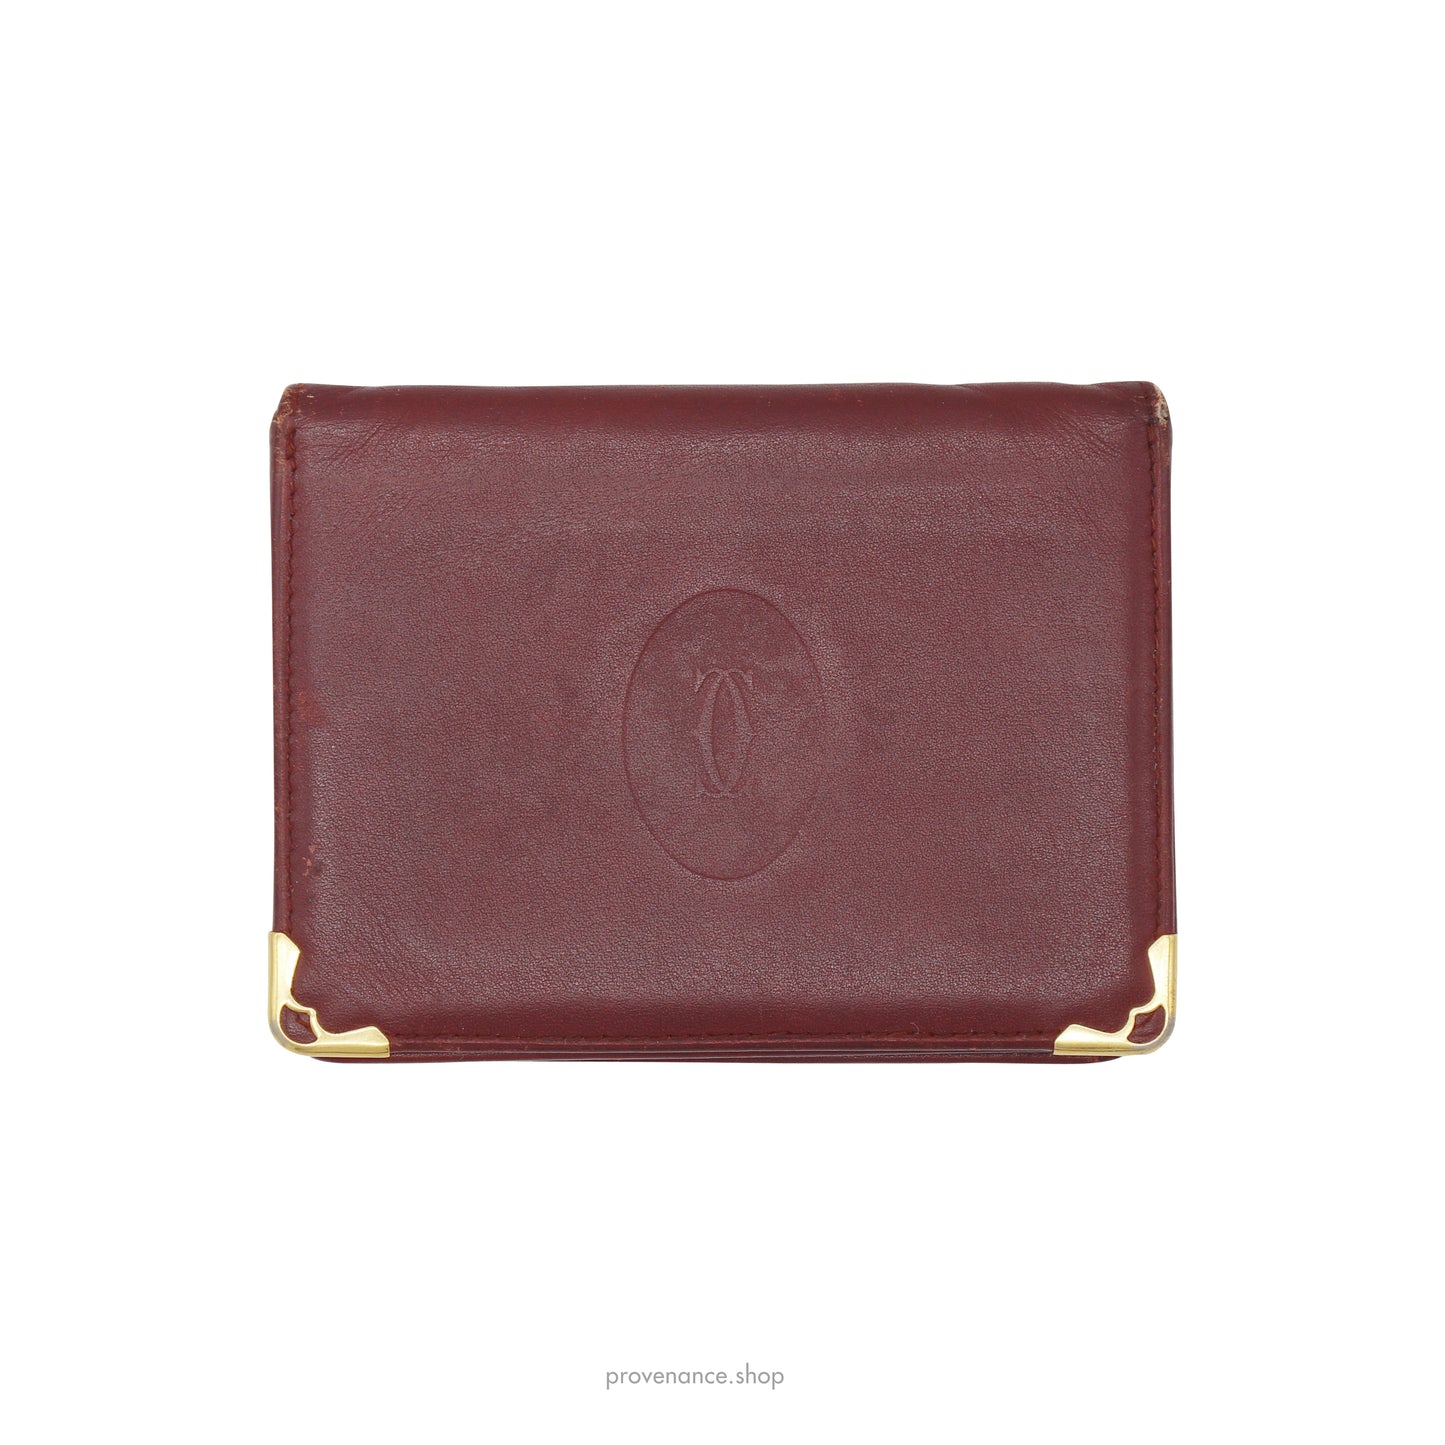 Cartier Pocket Organizer Wallet - Burgundy Leather